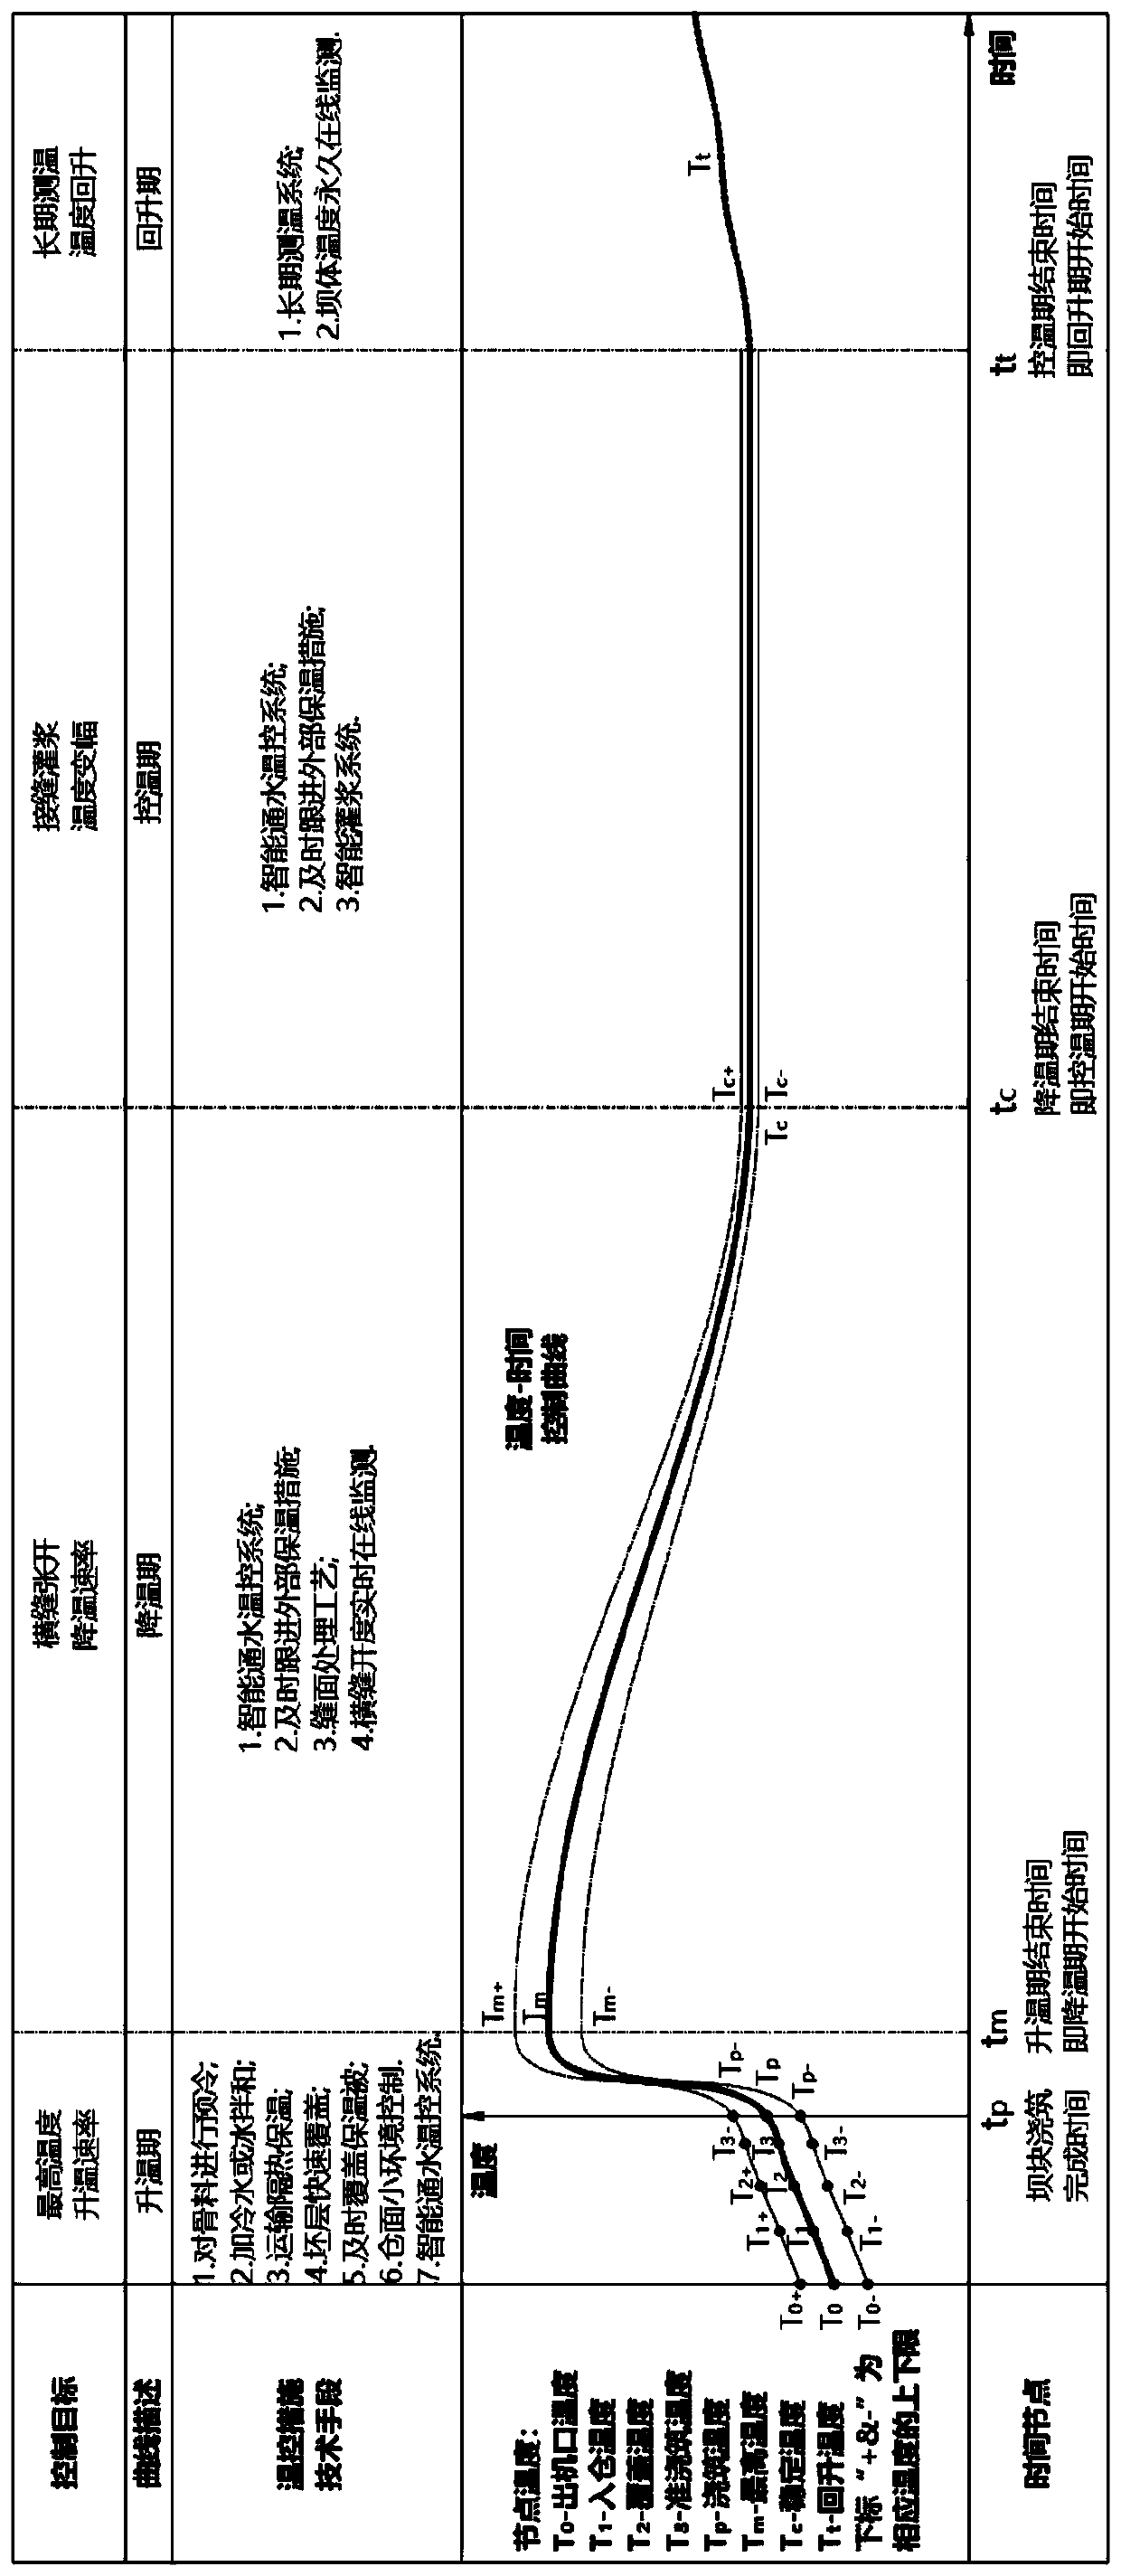 Construction full-period concrete arch dam temperature control curve model